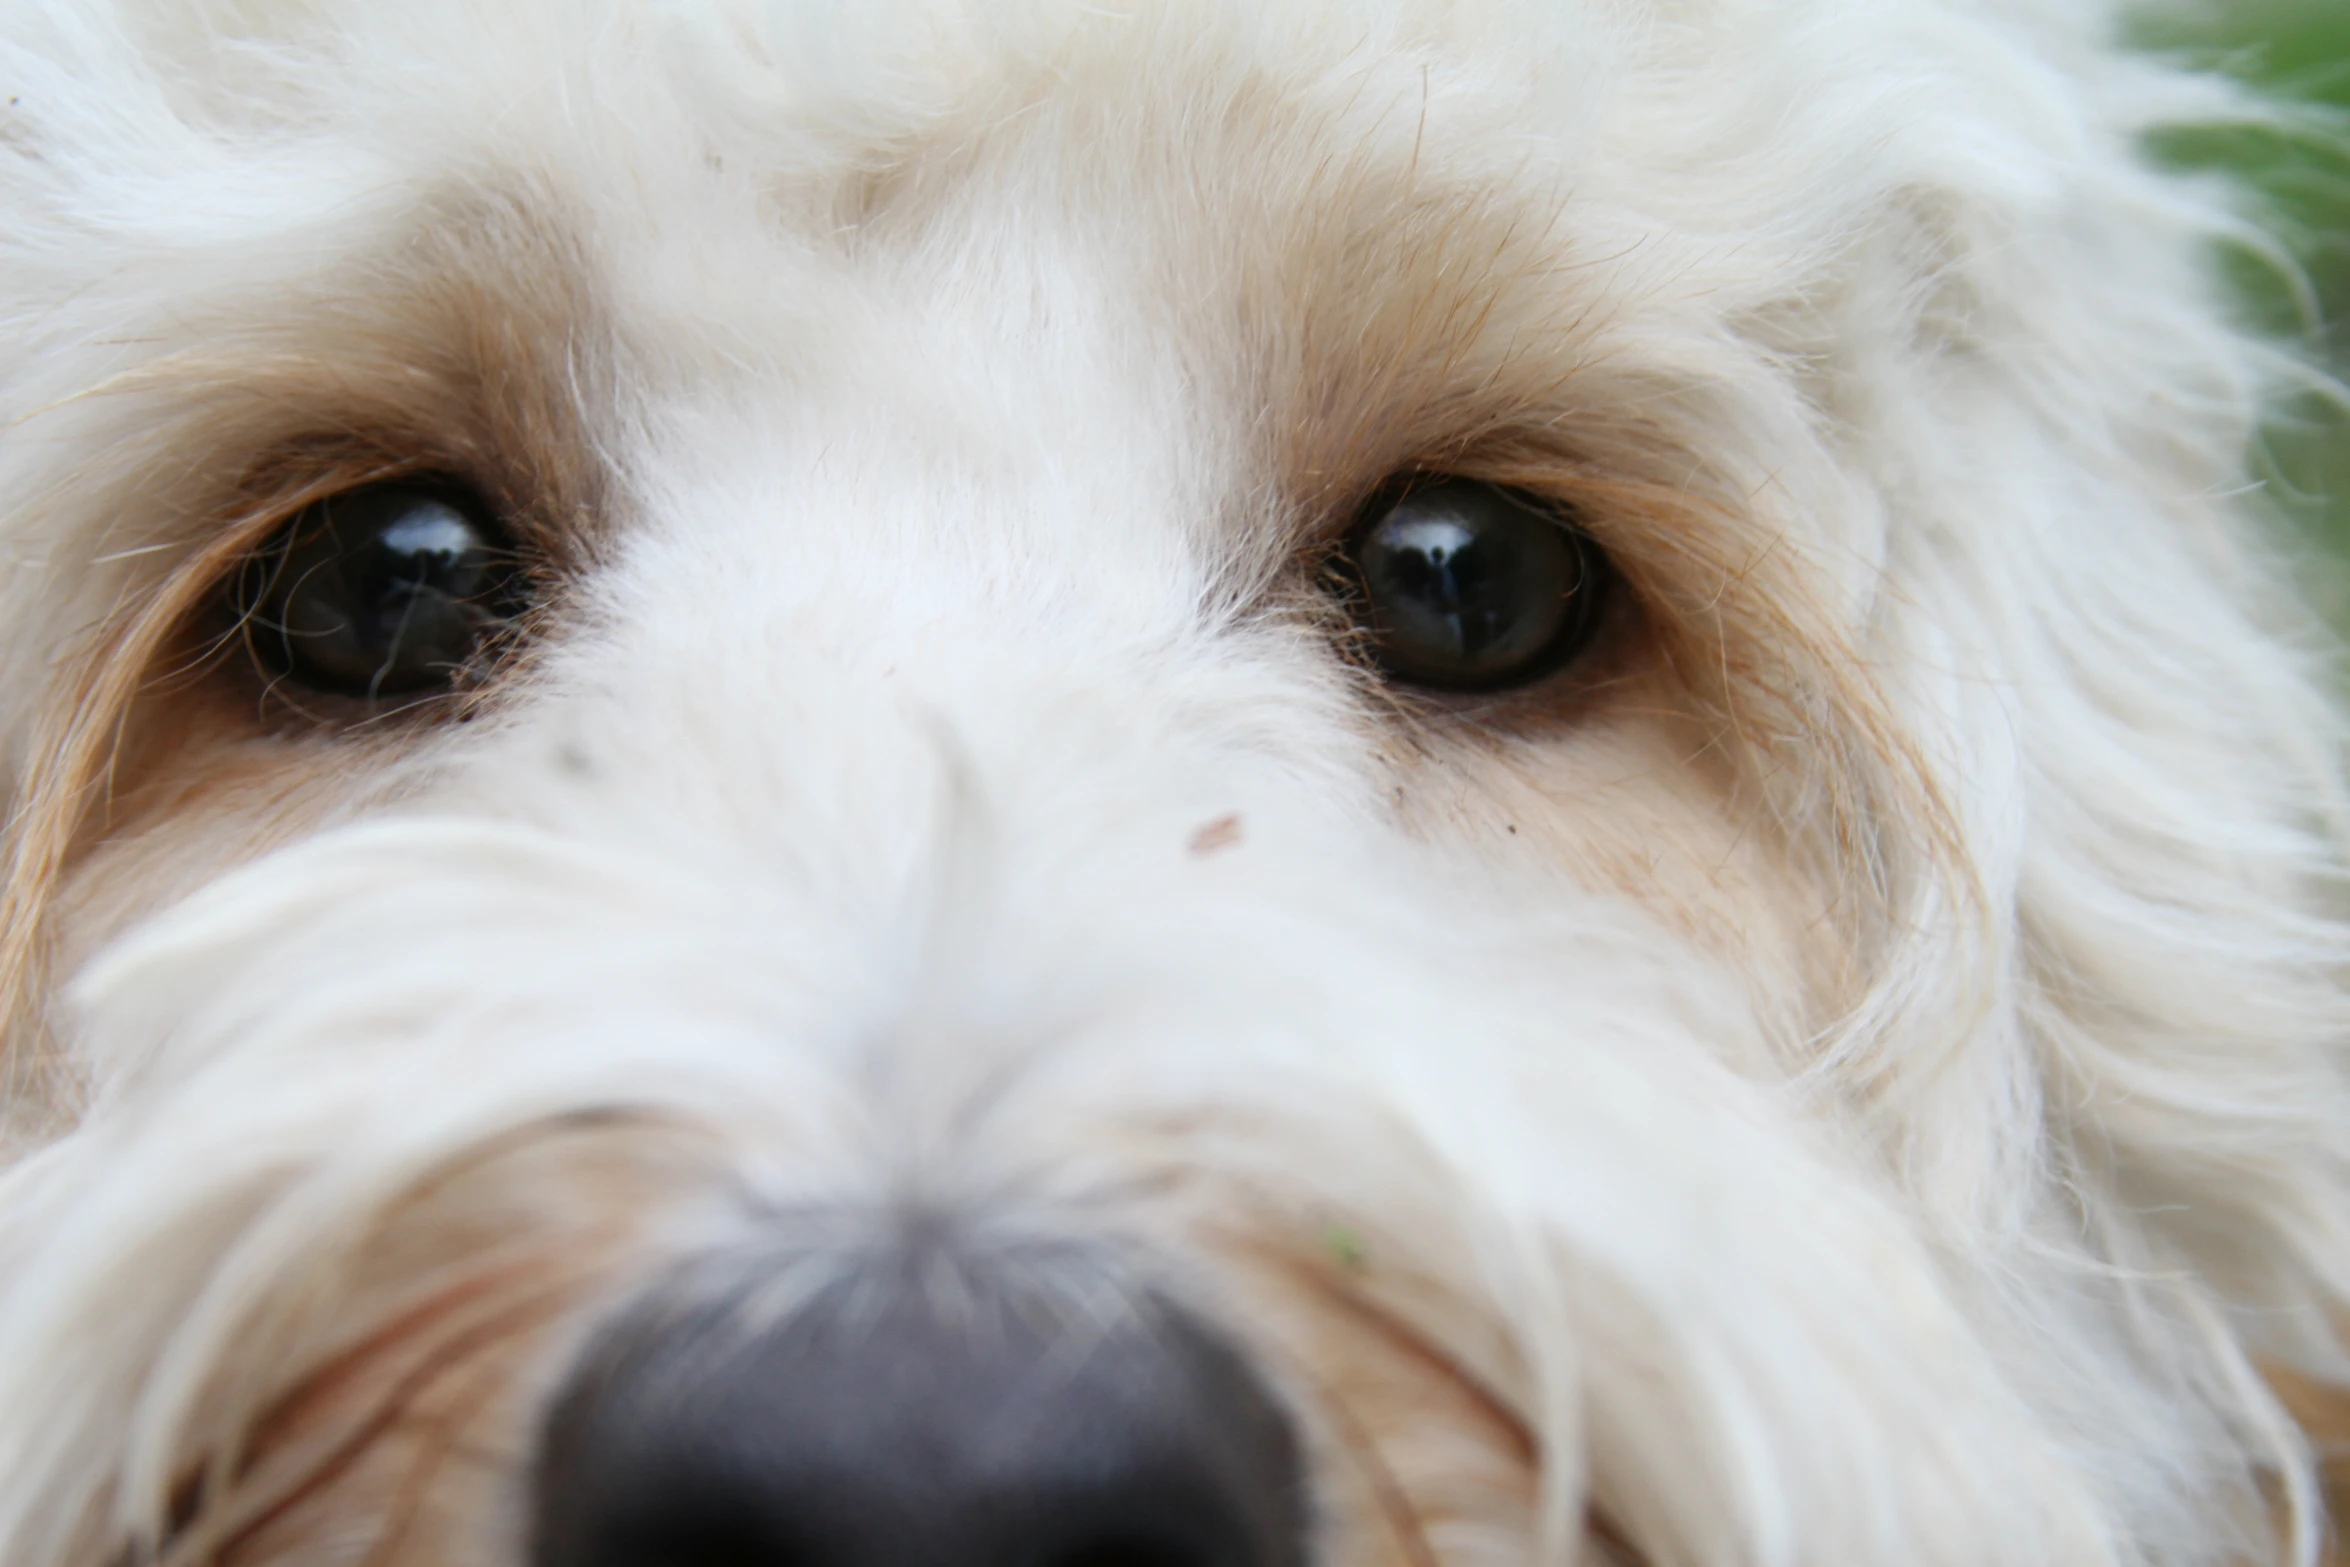 a gy white dog with large black eyes